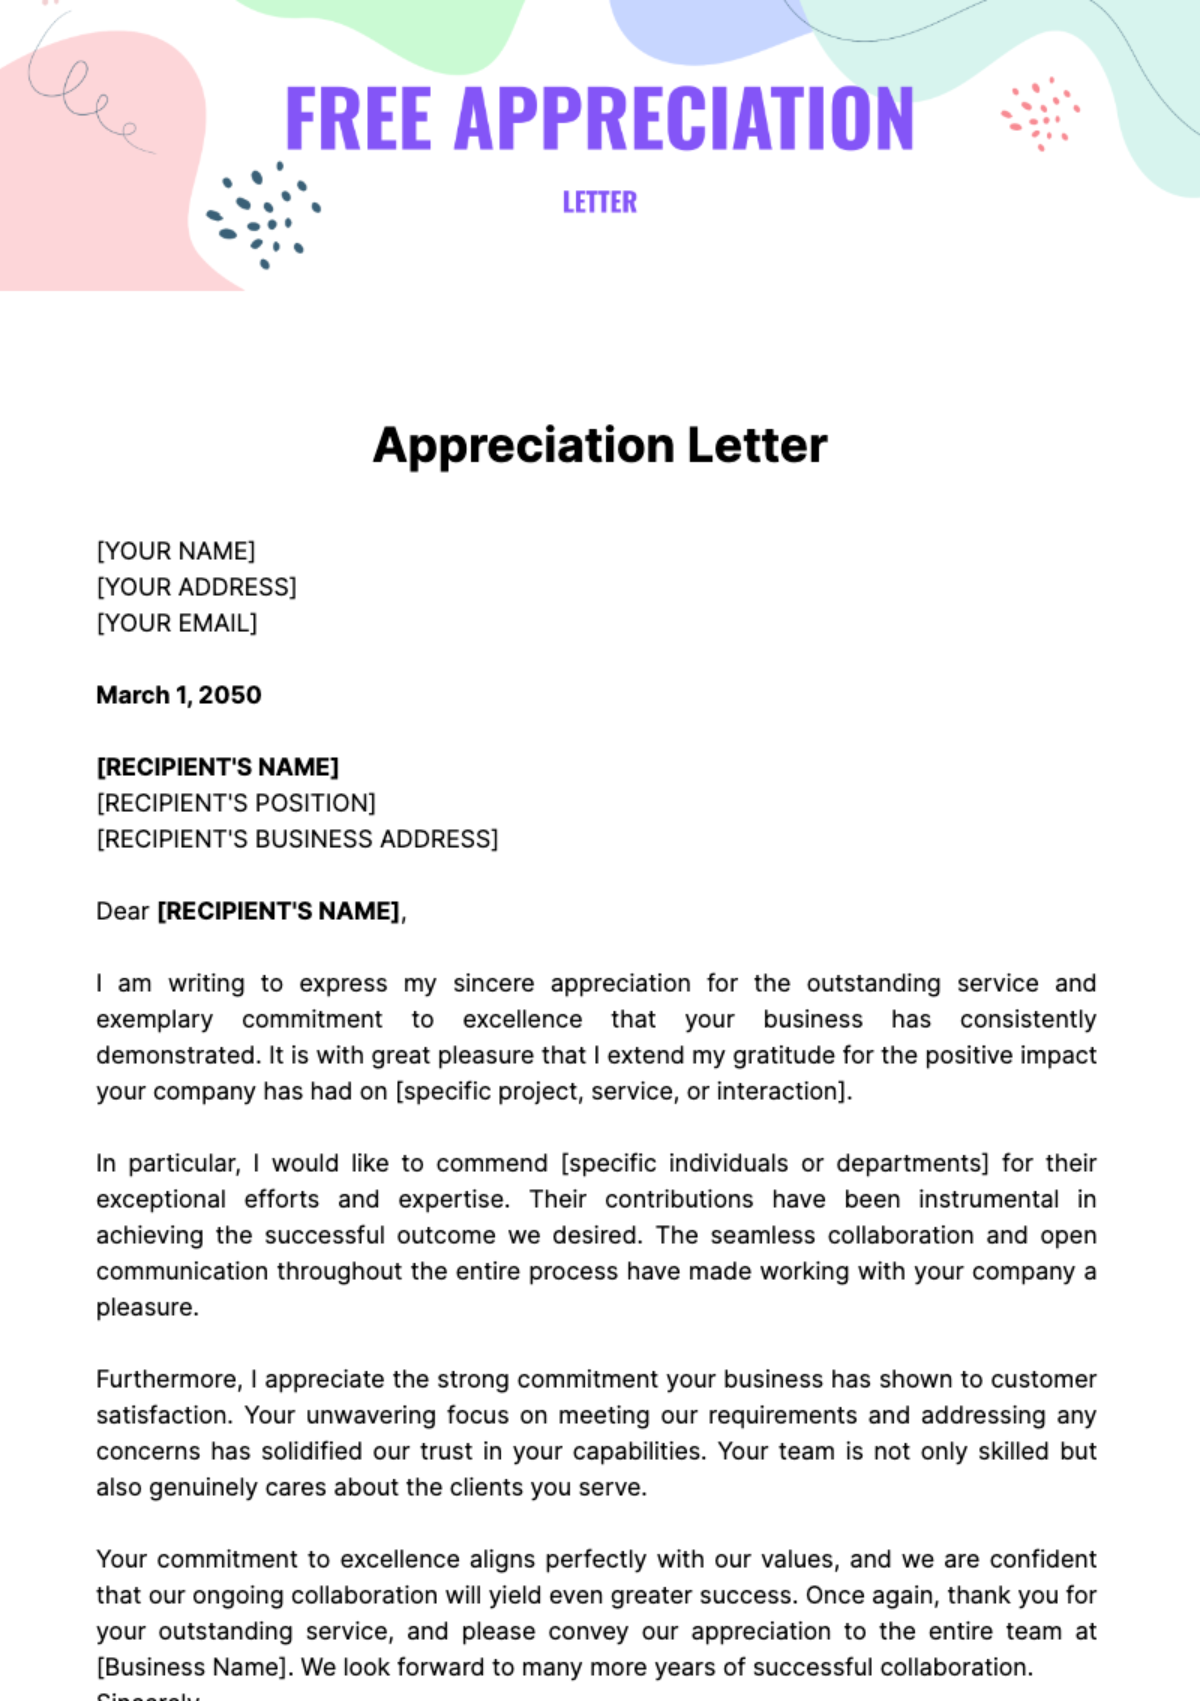 Free Appreciation Letter Template